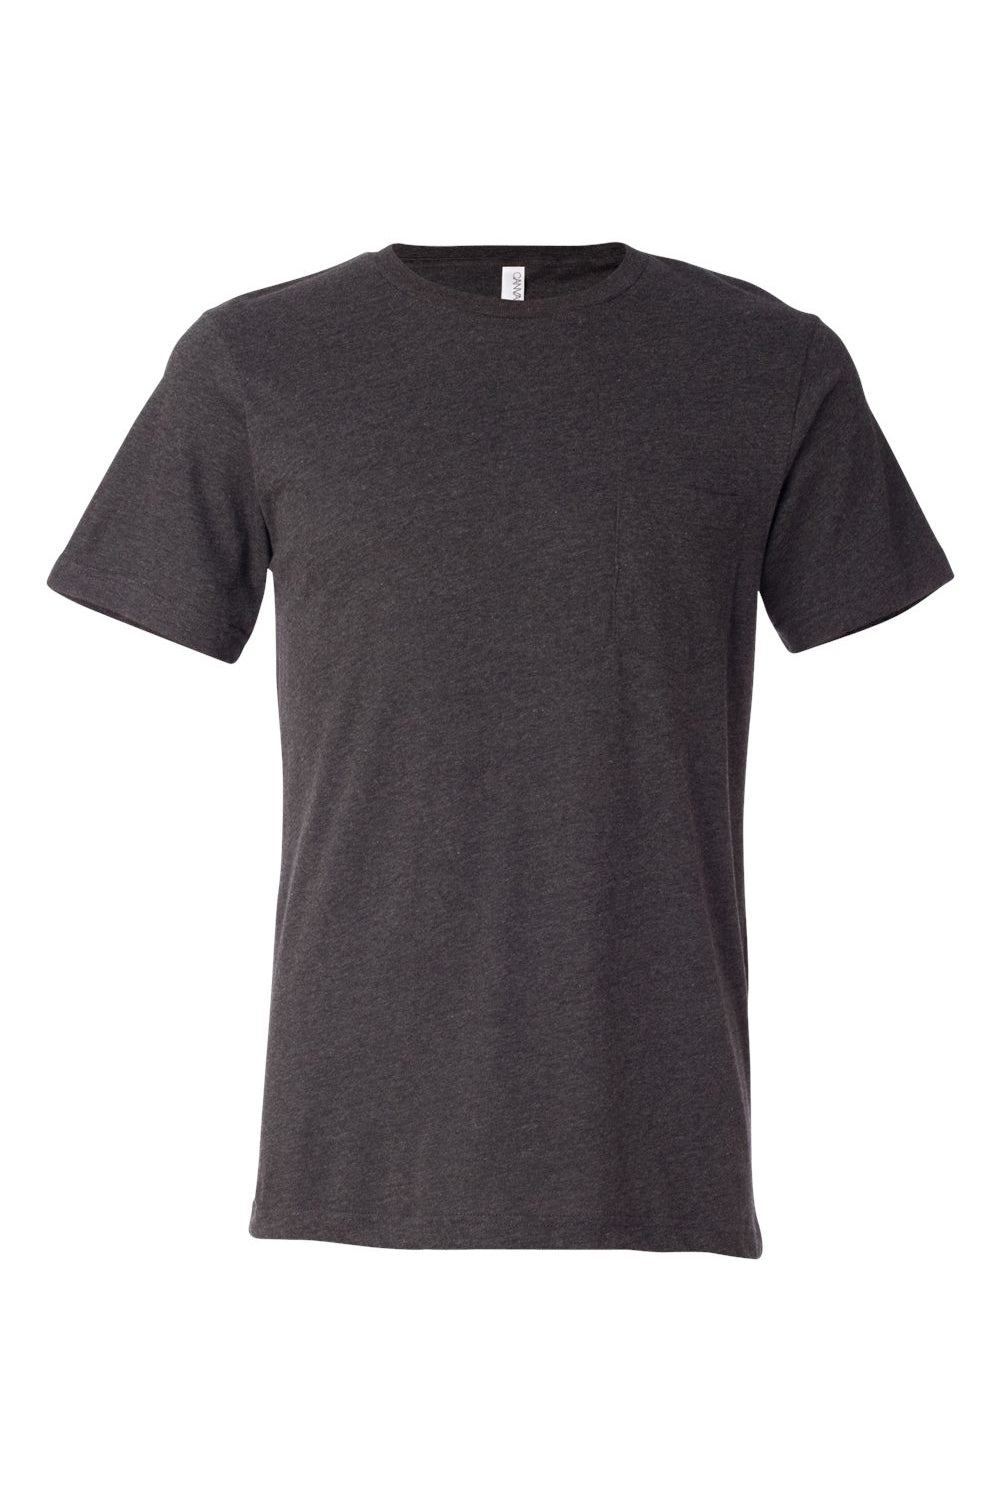 Bella + Canvas 3021 Mens Jersey Short Sleeve Crewneck T-Shirt w/ Pocket Heather Dark Grey Flat Front